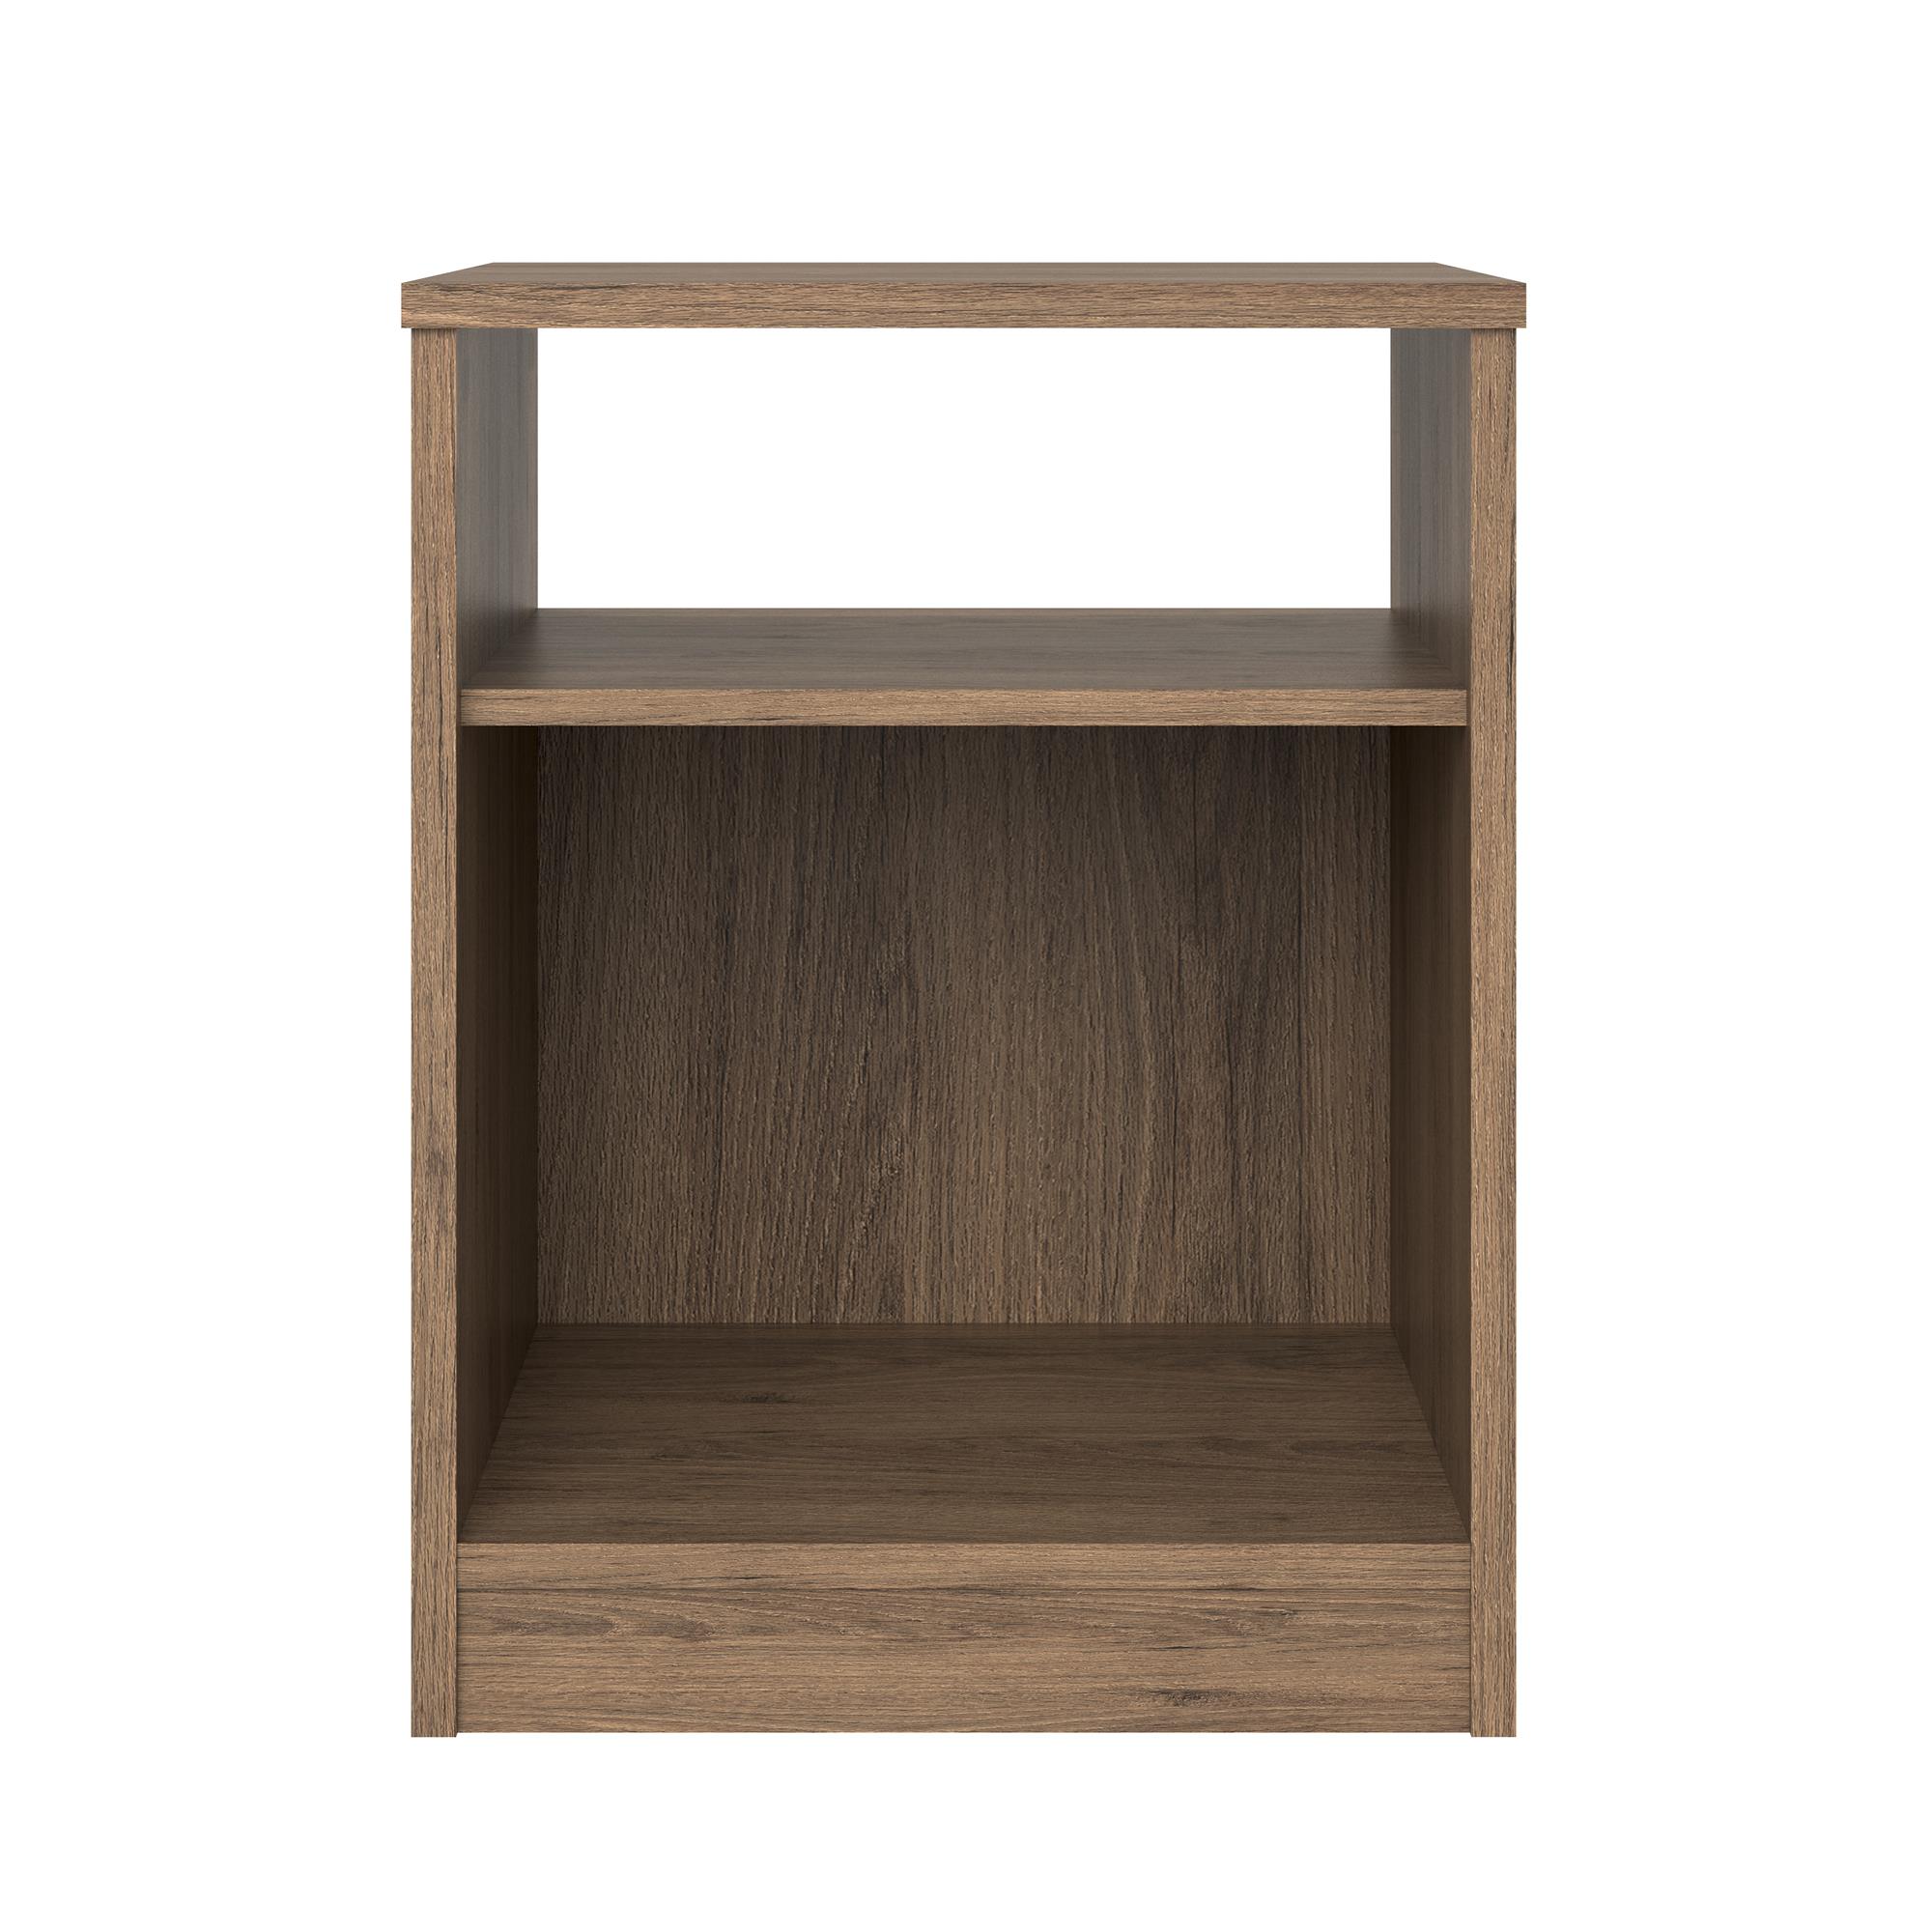 Mainstays Classic Open Shelf Nightstand, Rustic Oak - image 4 of 5